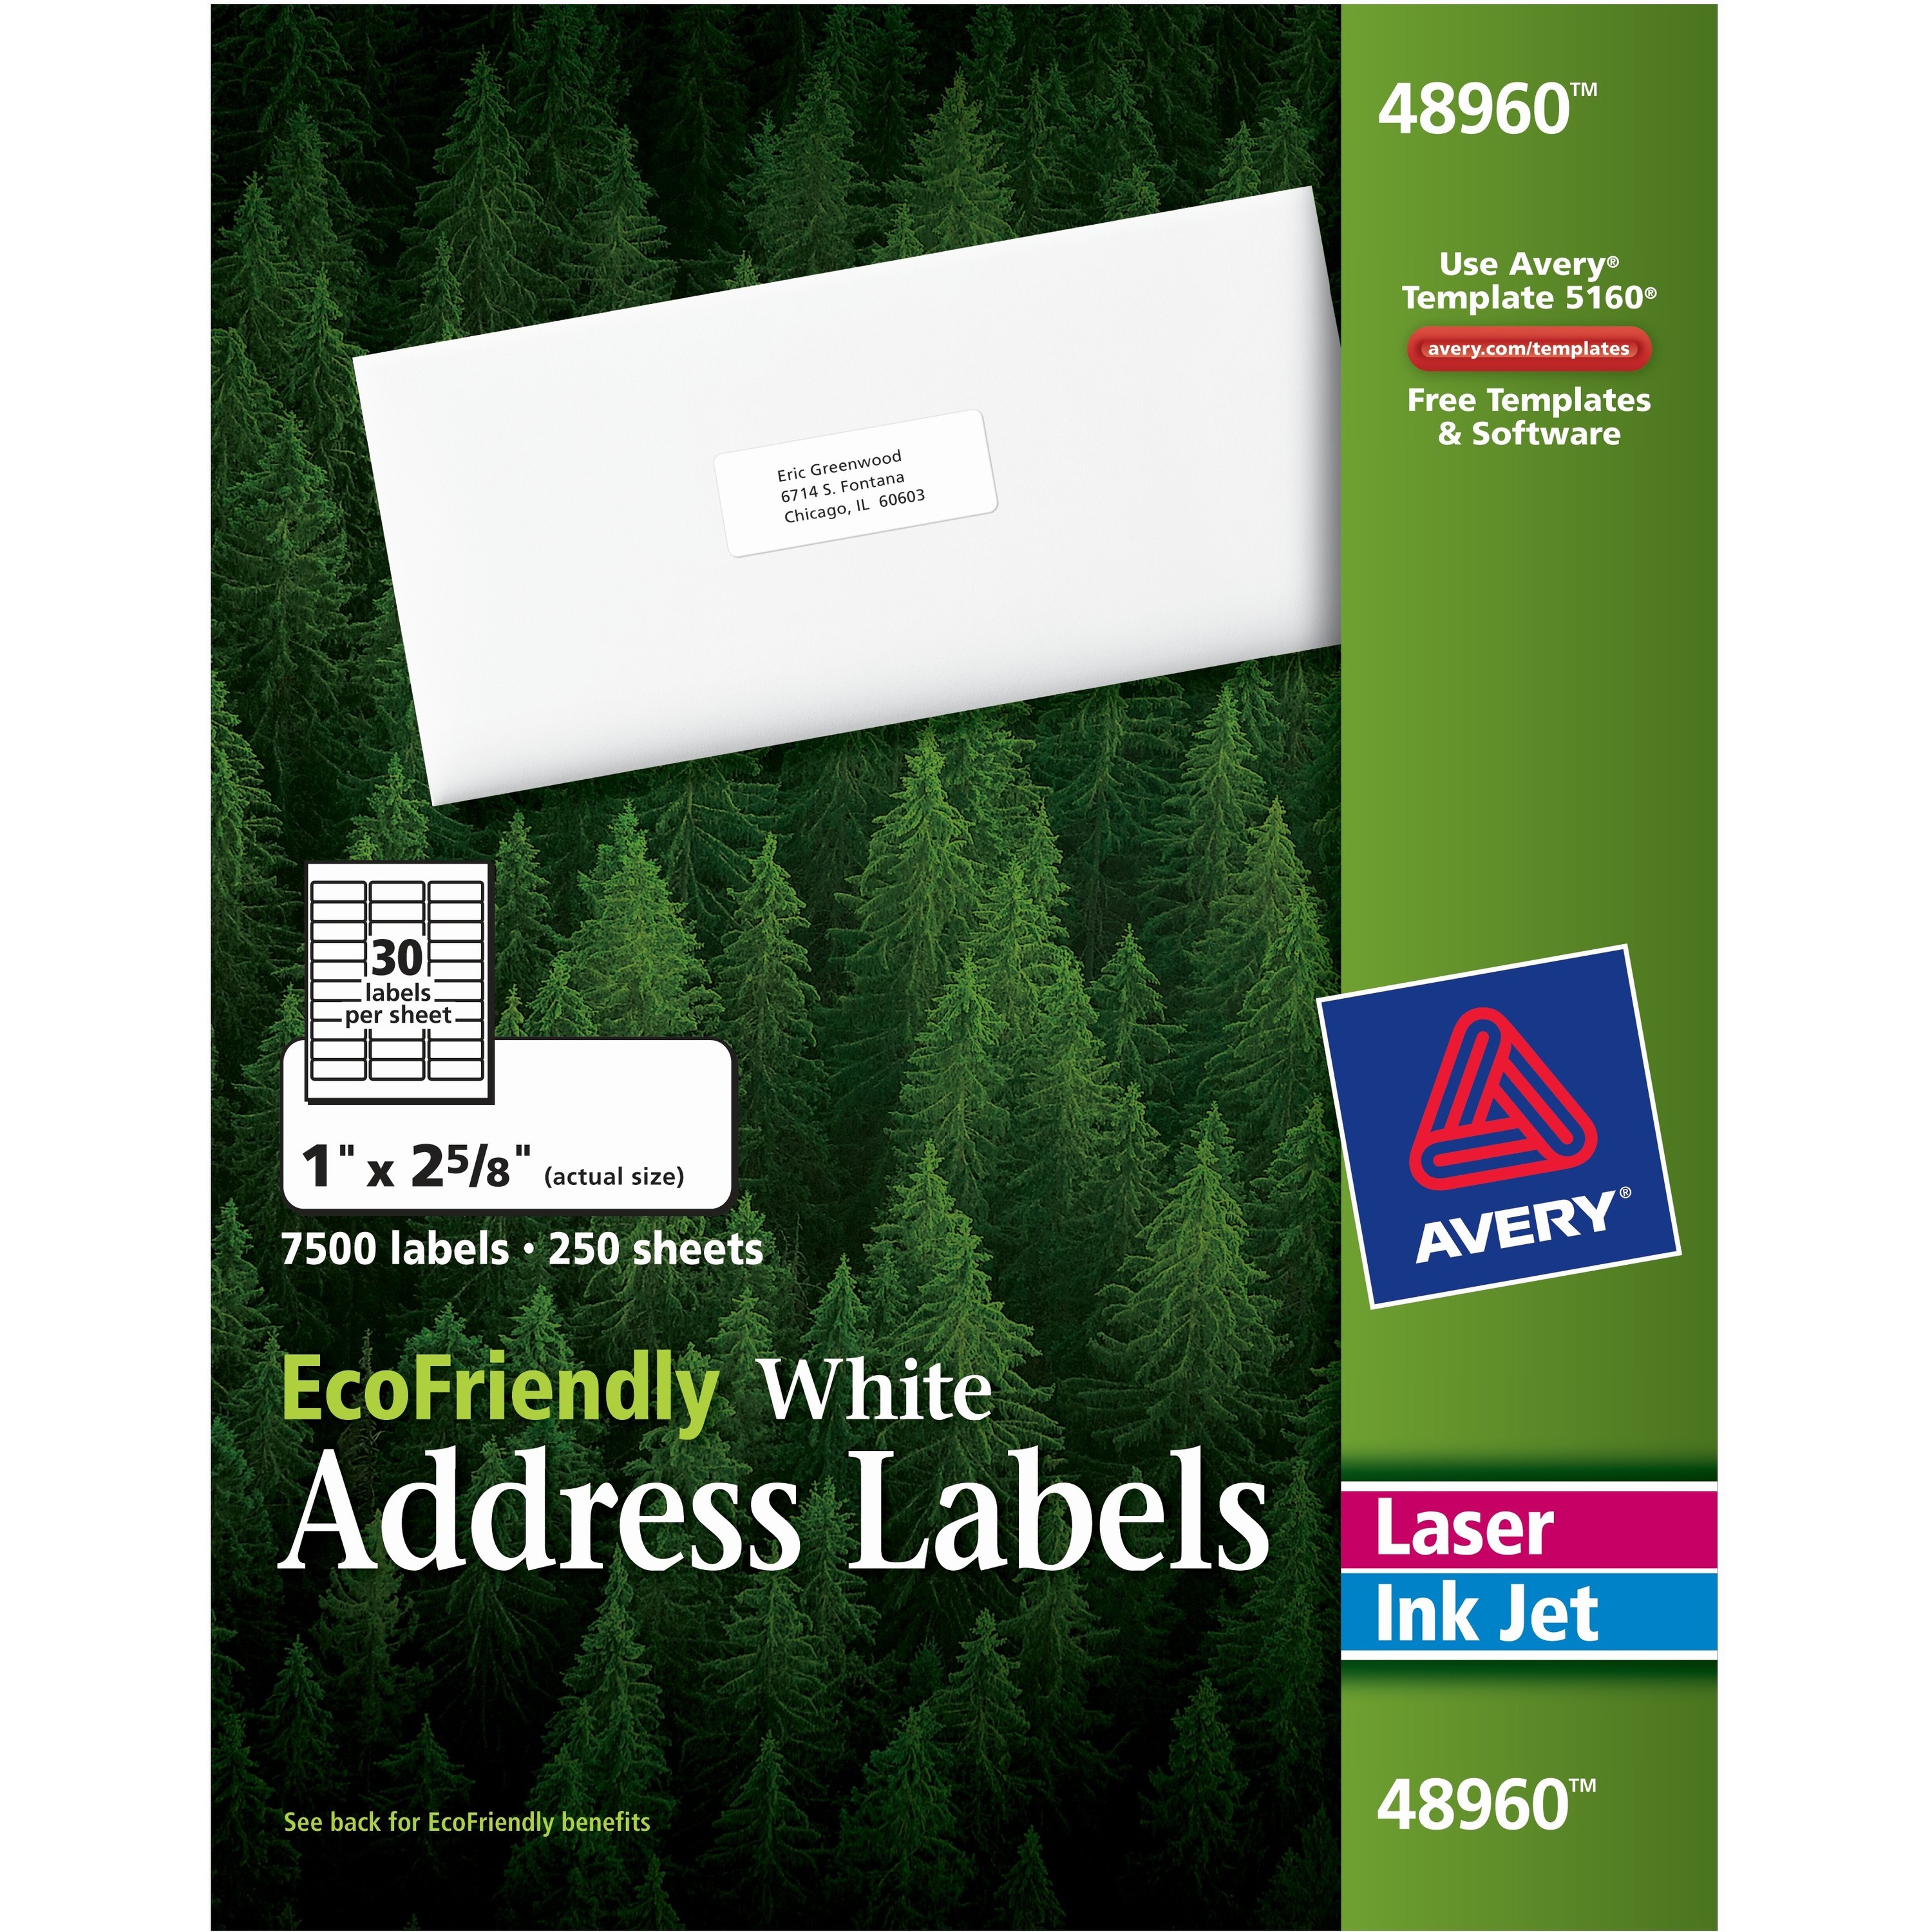 free-printable-address-labels-30-per-sheet-free-avery-templates